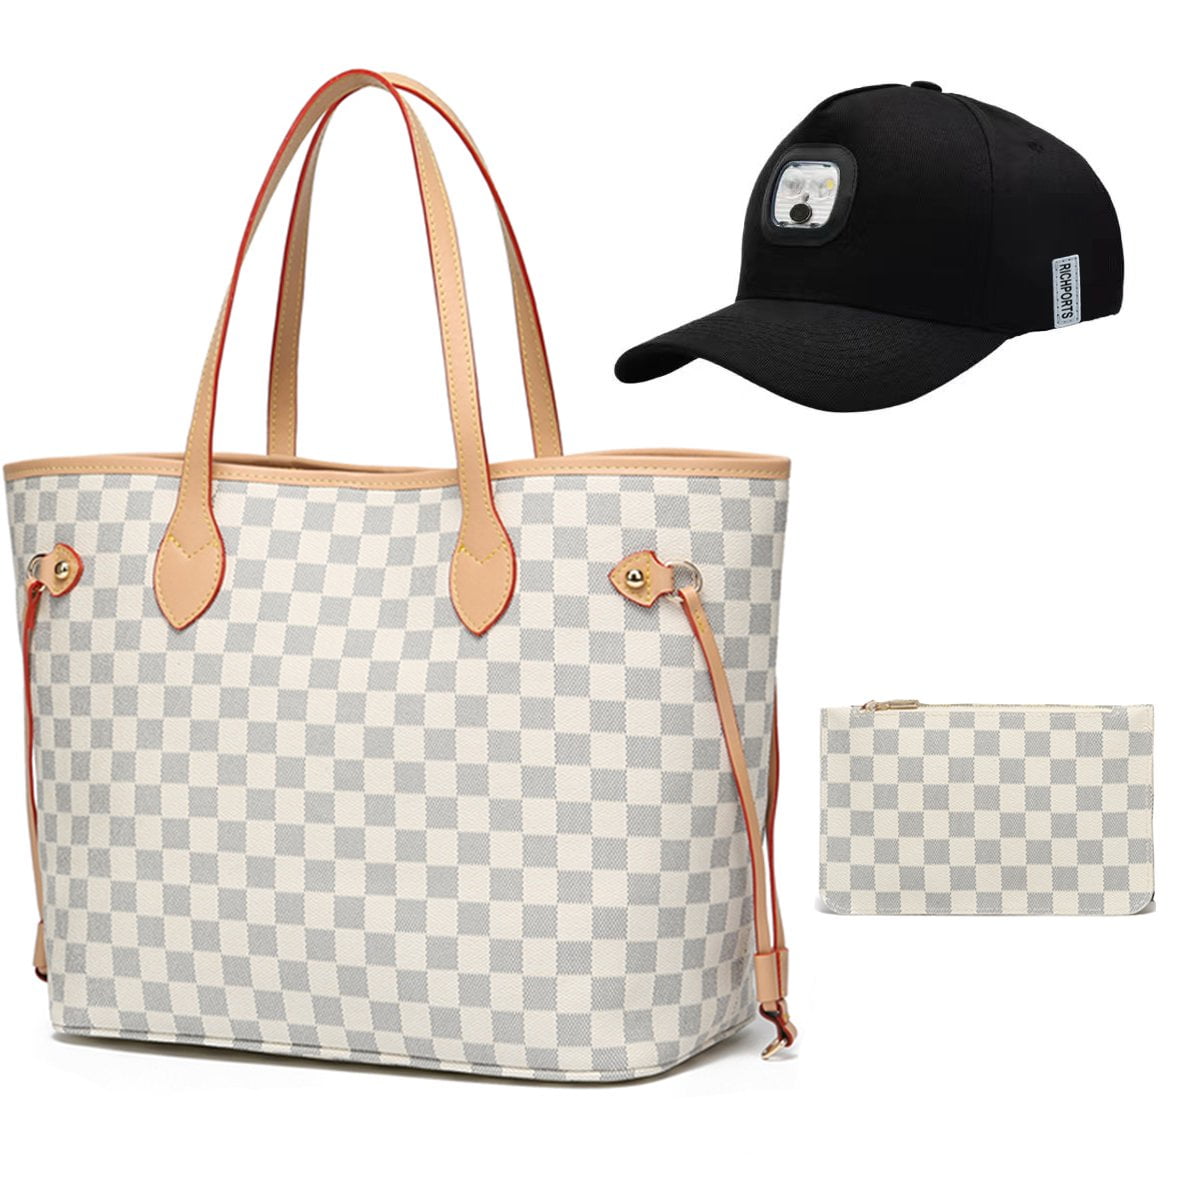 MK Gdledy Checkered Travel PU Leather Oversized Weekender Duffel Bag  Overnight Handbag Gym Bag for Large 